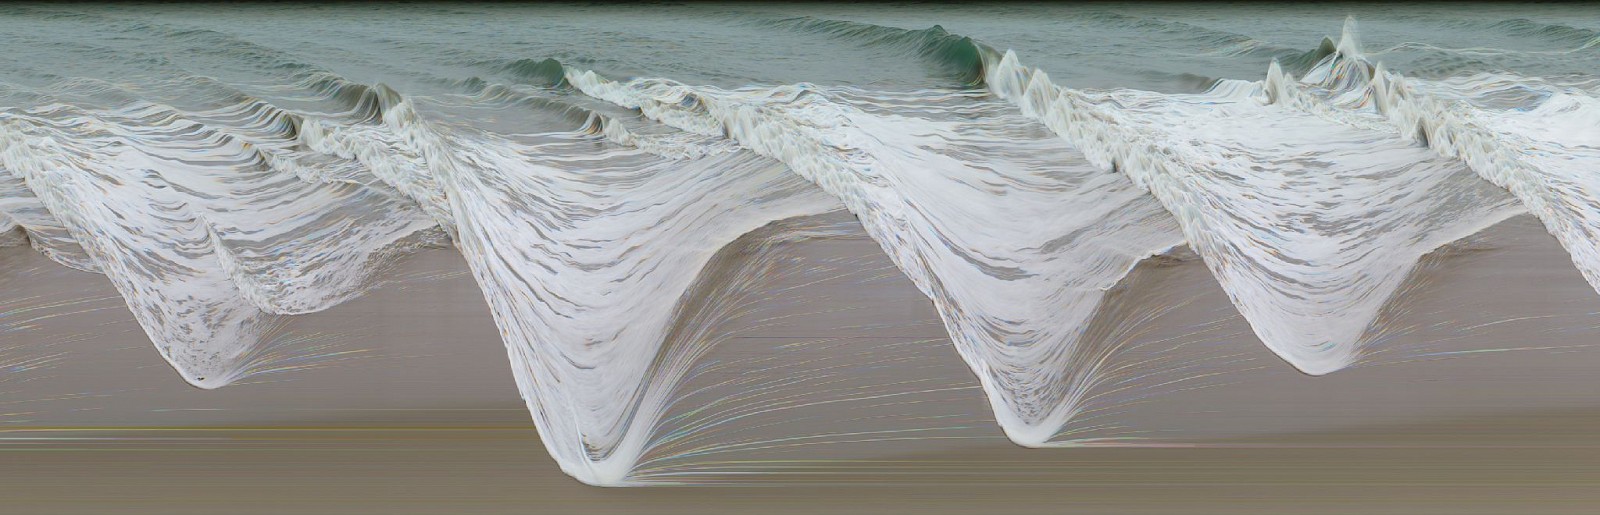 Jay Mark Johnson, VENICE BEACH WAVES 9, 2011 Venice Beach CA
archival pigment on paper, mounted on aluminum, 40 x 124 in. (101.6 x 315 cm)